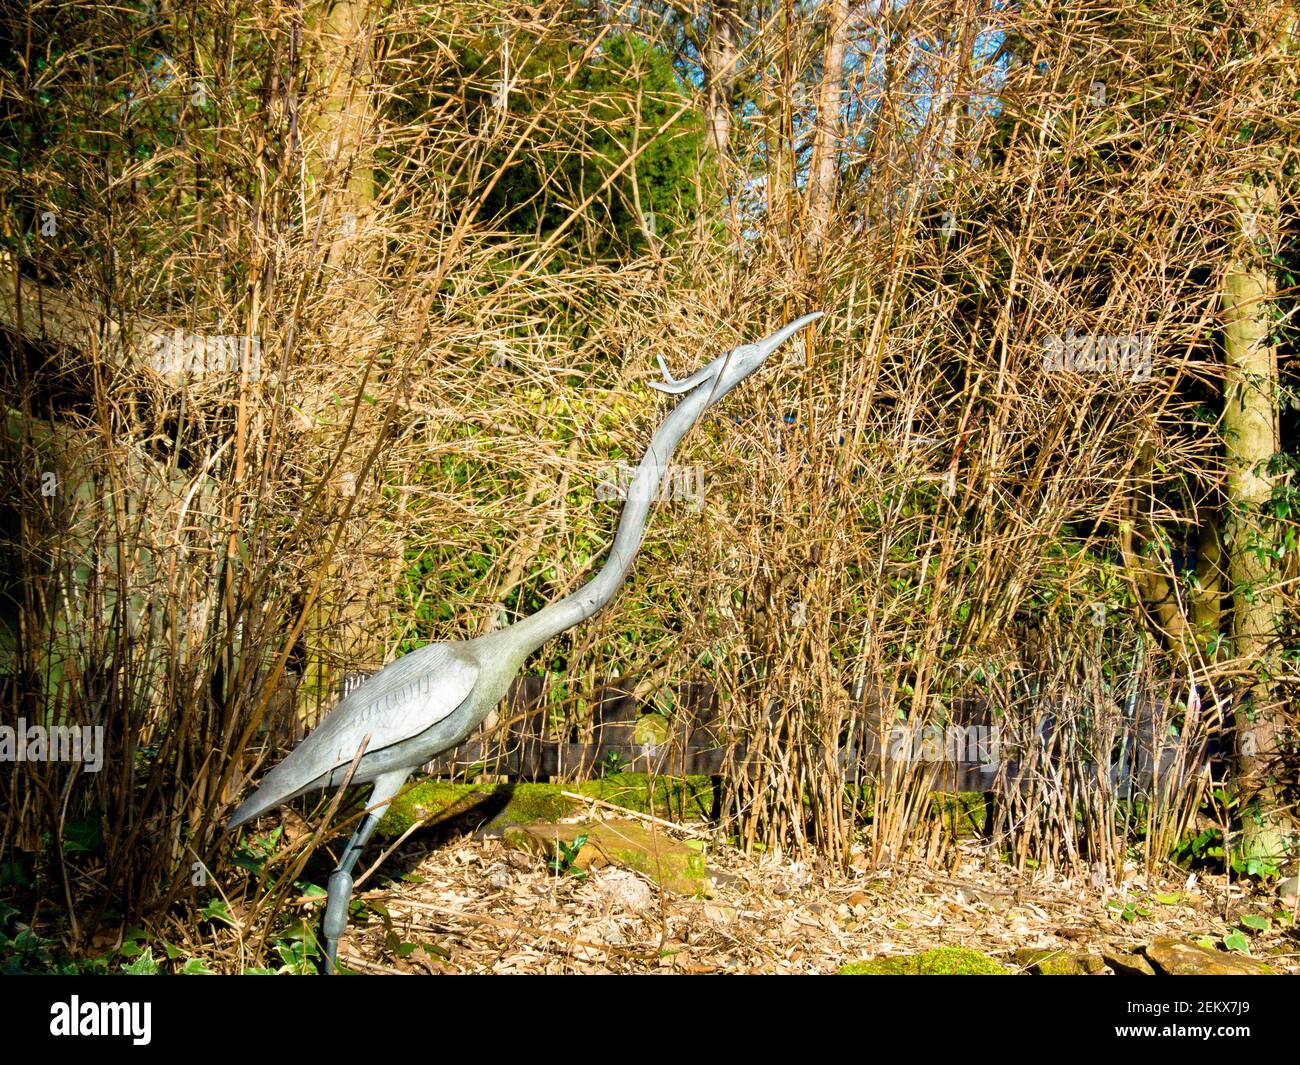 sculpture of a crane, wading bird, stylised, stylish, silver, metal, public art Stock Photo